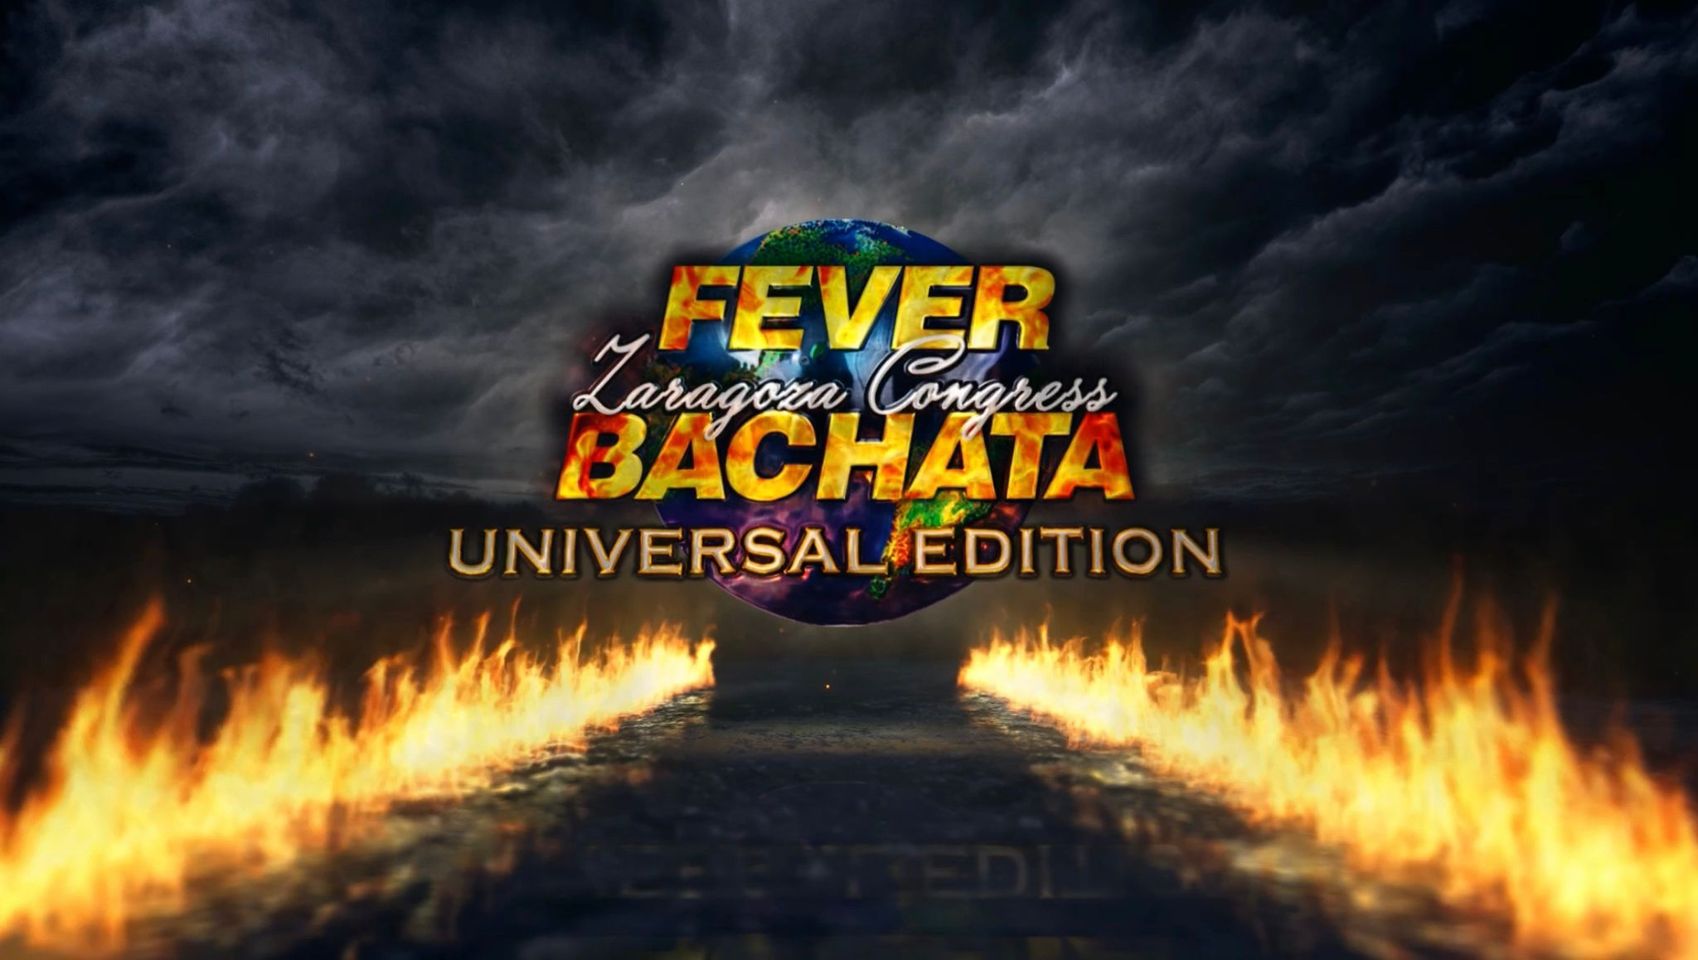 Fever Bachata Zaragoza Congress 2024 (Universal Edition)